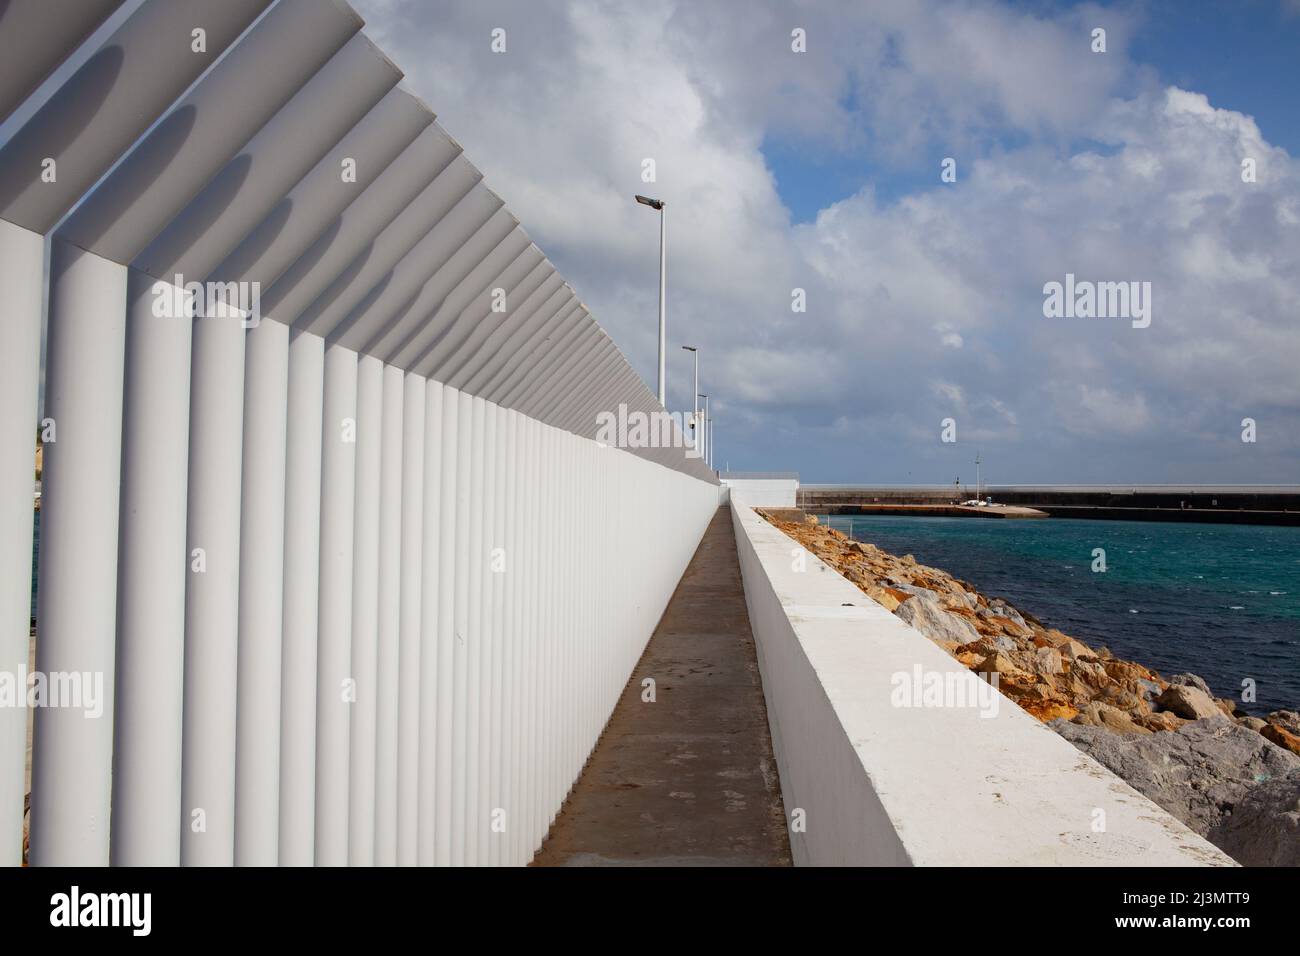 The protective iron fence around the port in Tarifa, Andlalucia, Spain Stock Photo